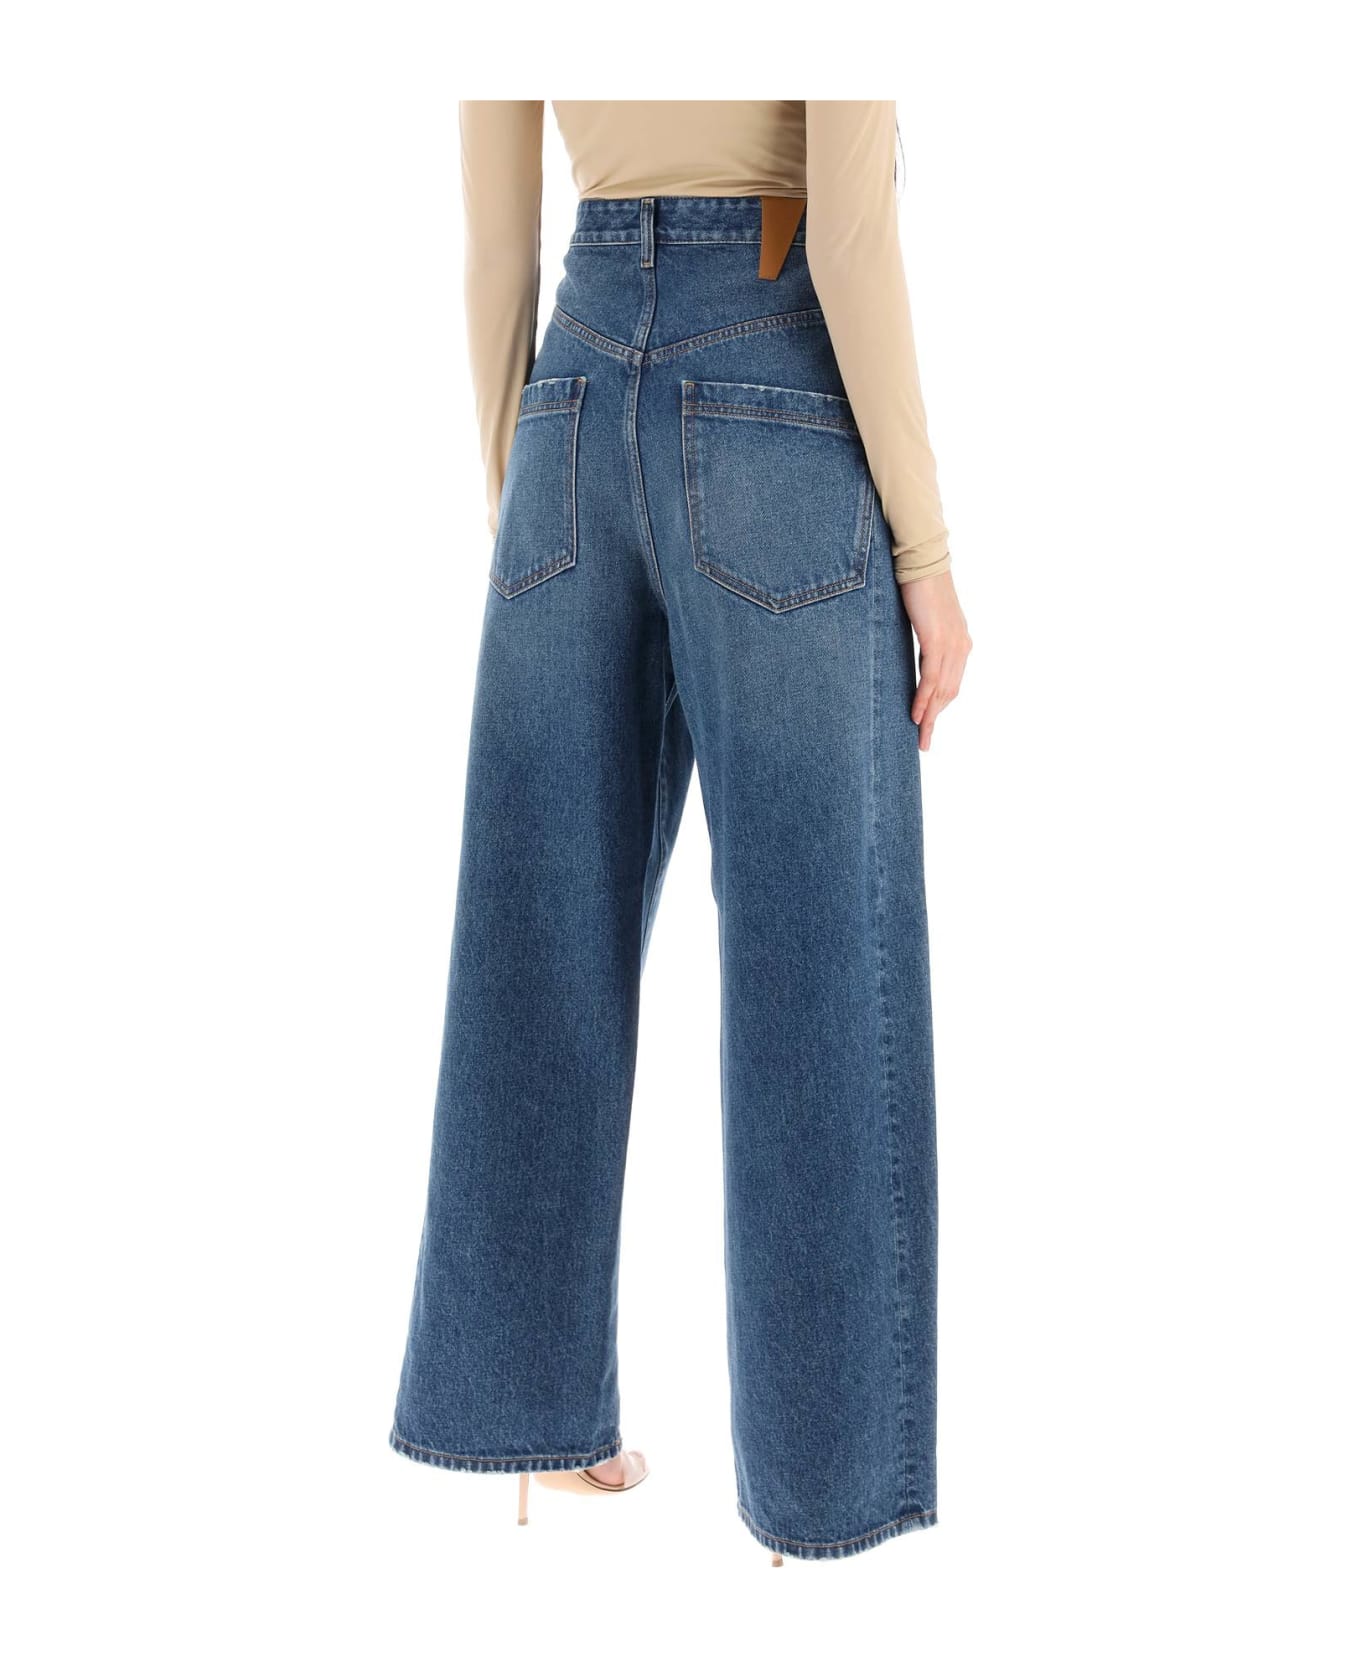 DARKPARK 'ines' Baggy Jeans With Folded Waistband - MEDIUM WASH (Light blue) デニム